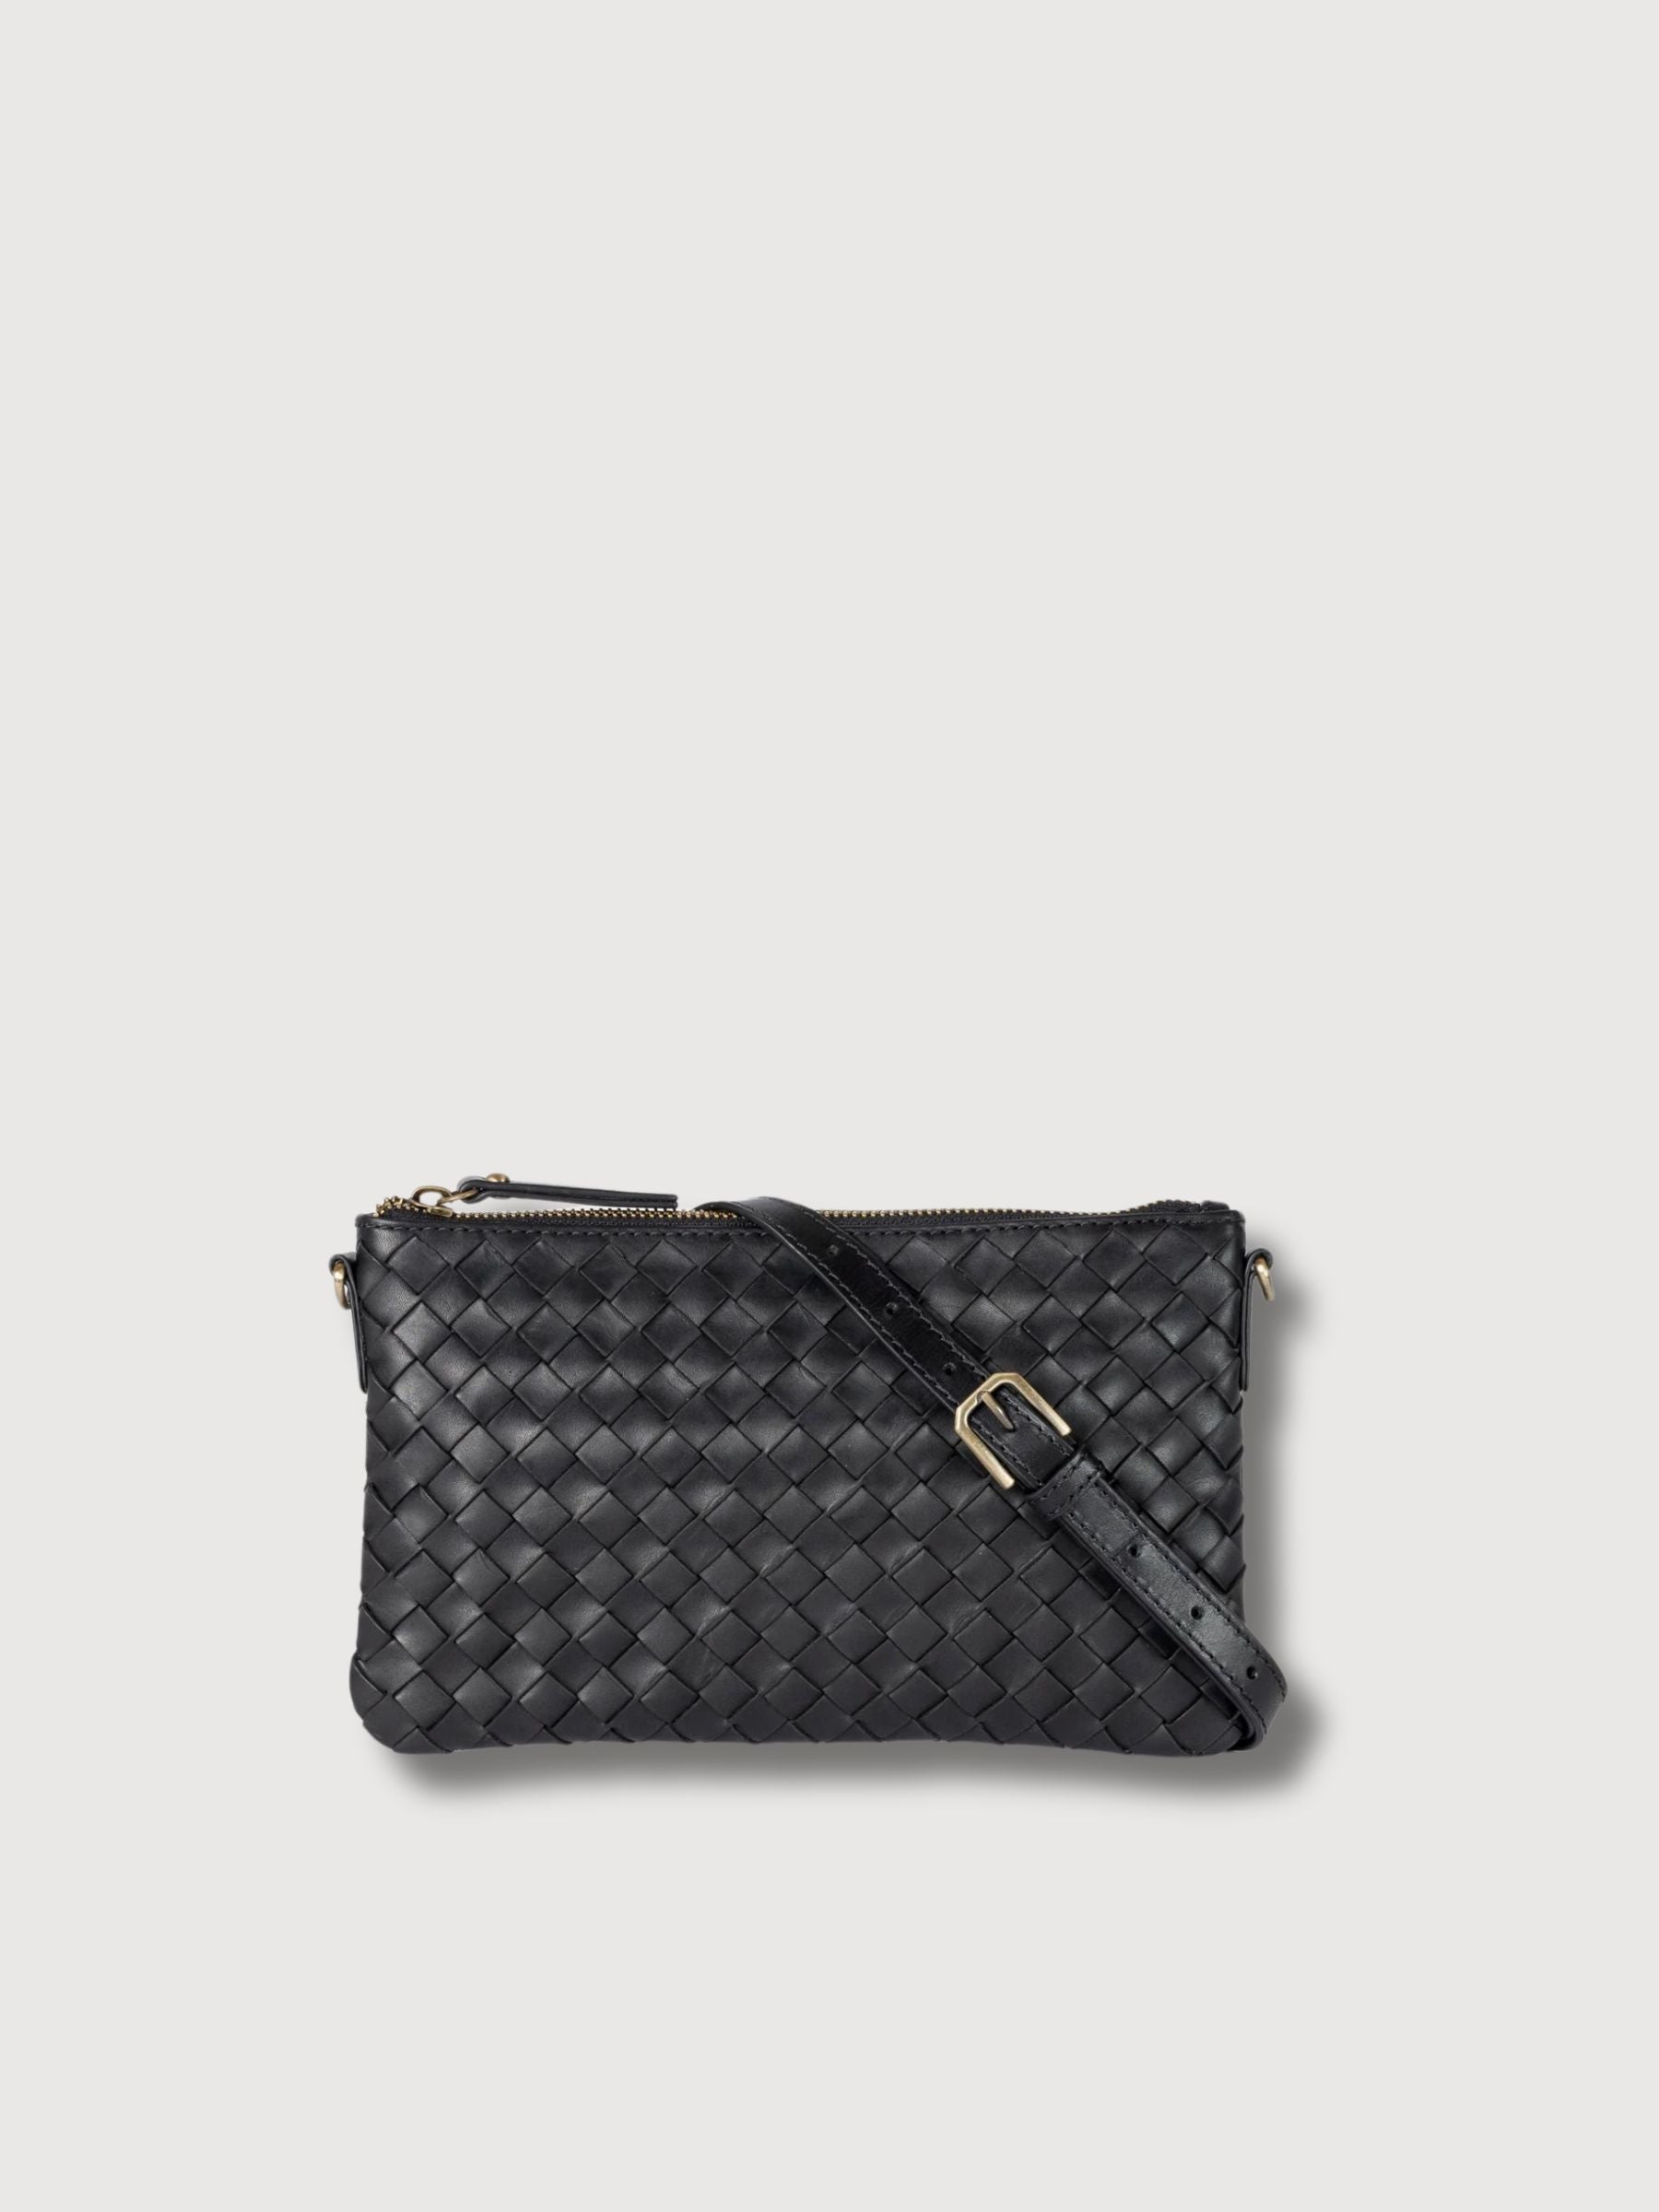 Lexi Black Woven Classic Leather | O My Bag